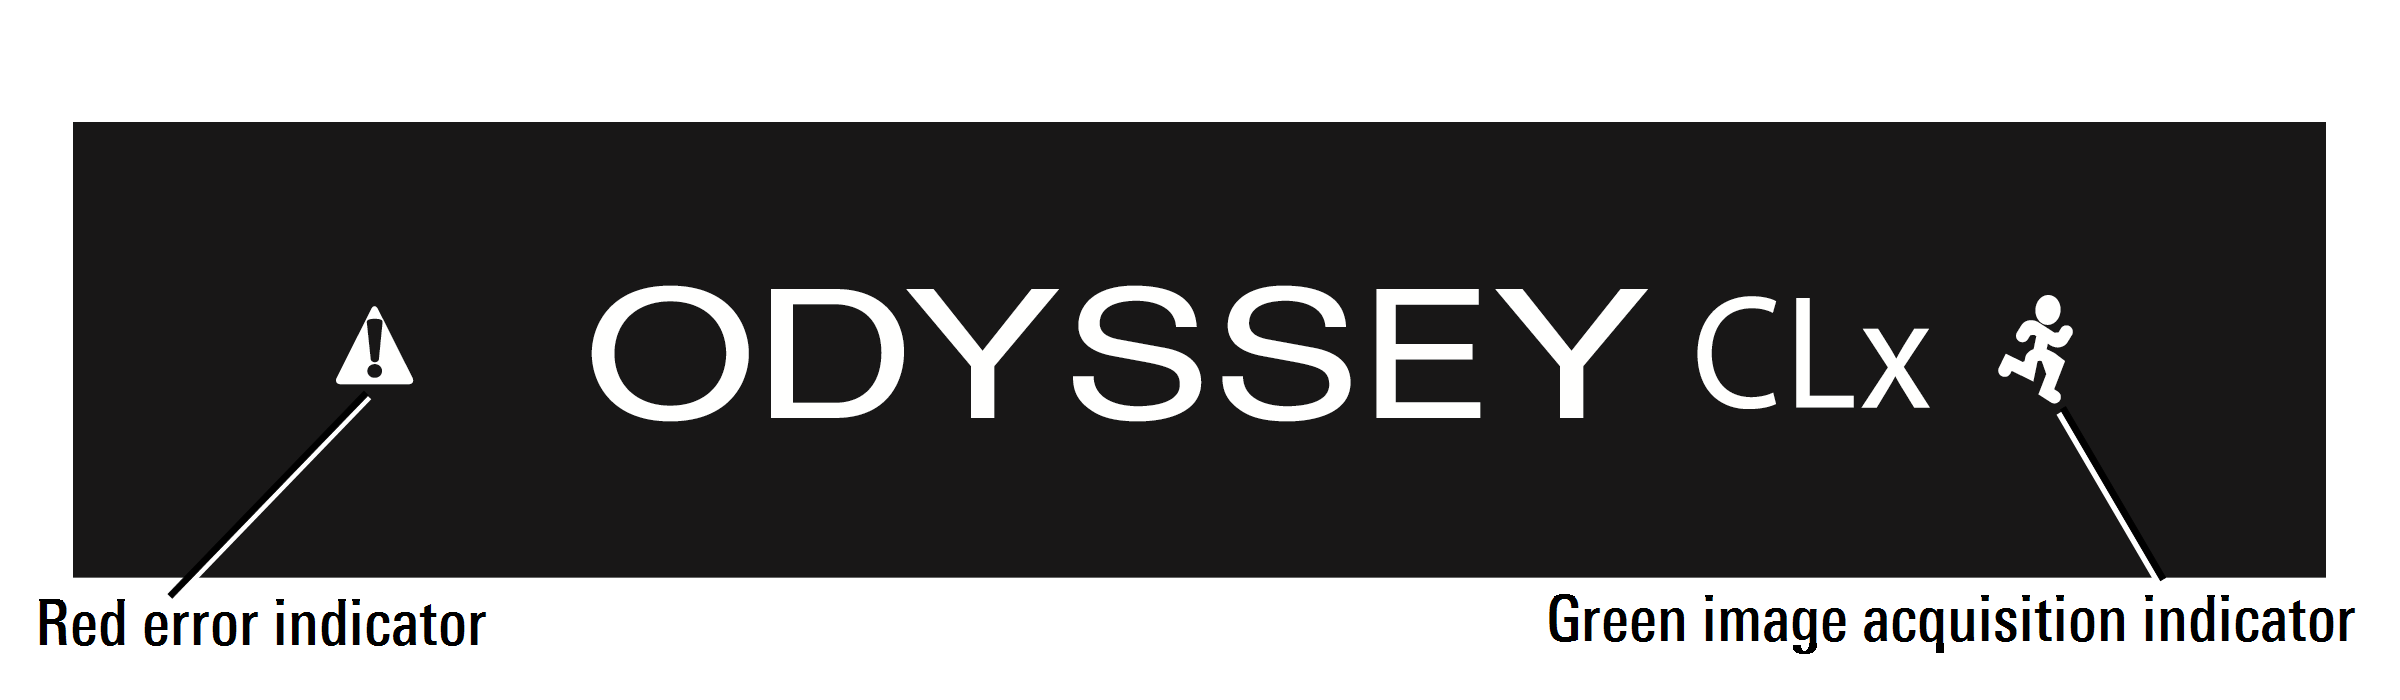 Odyssey CLx front panel indicators